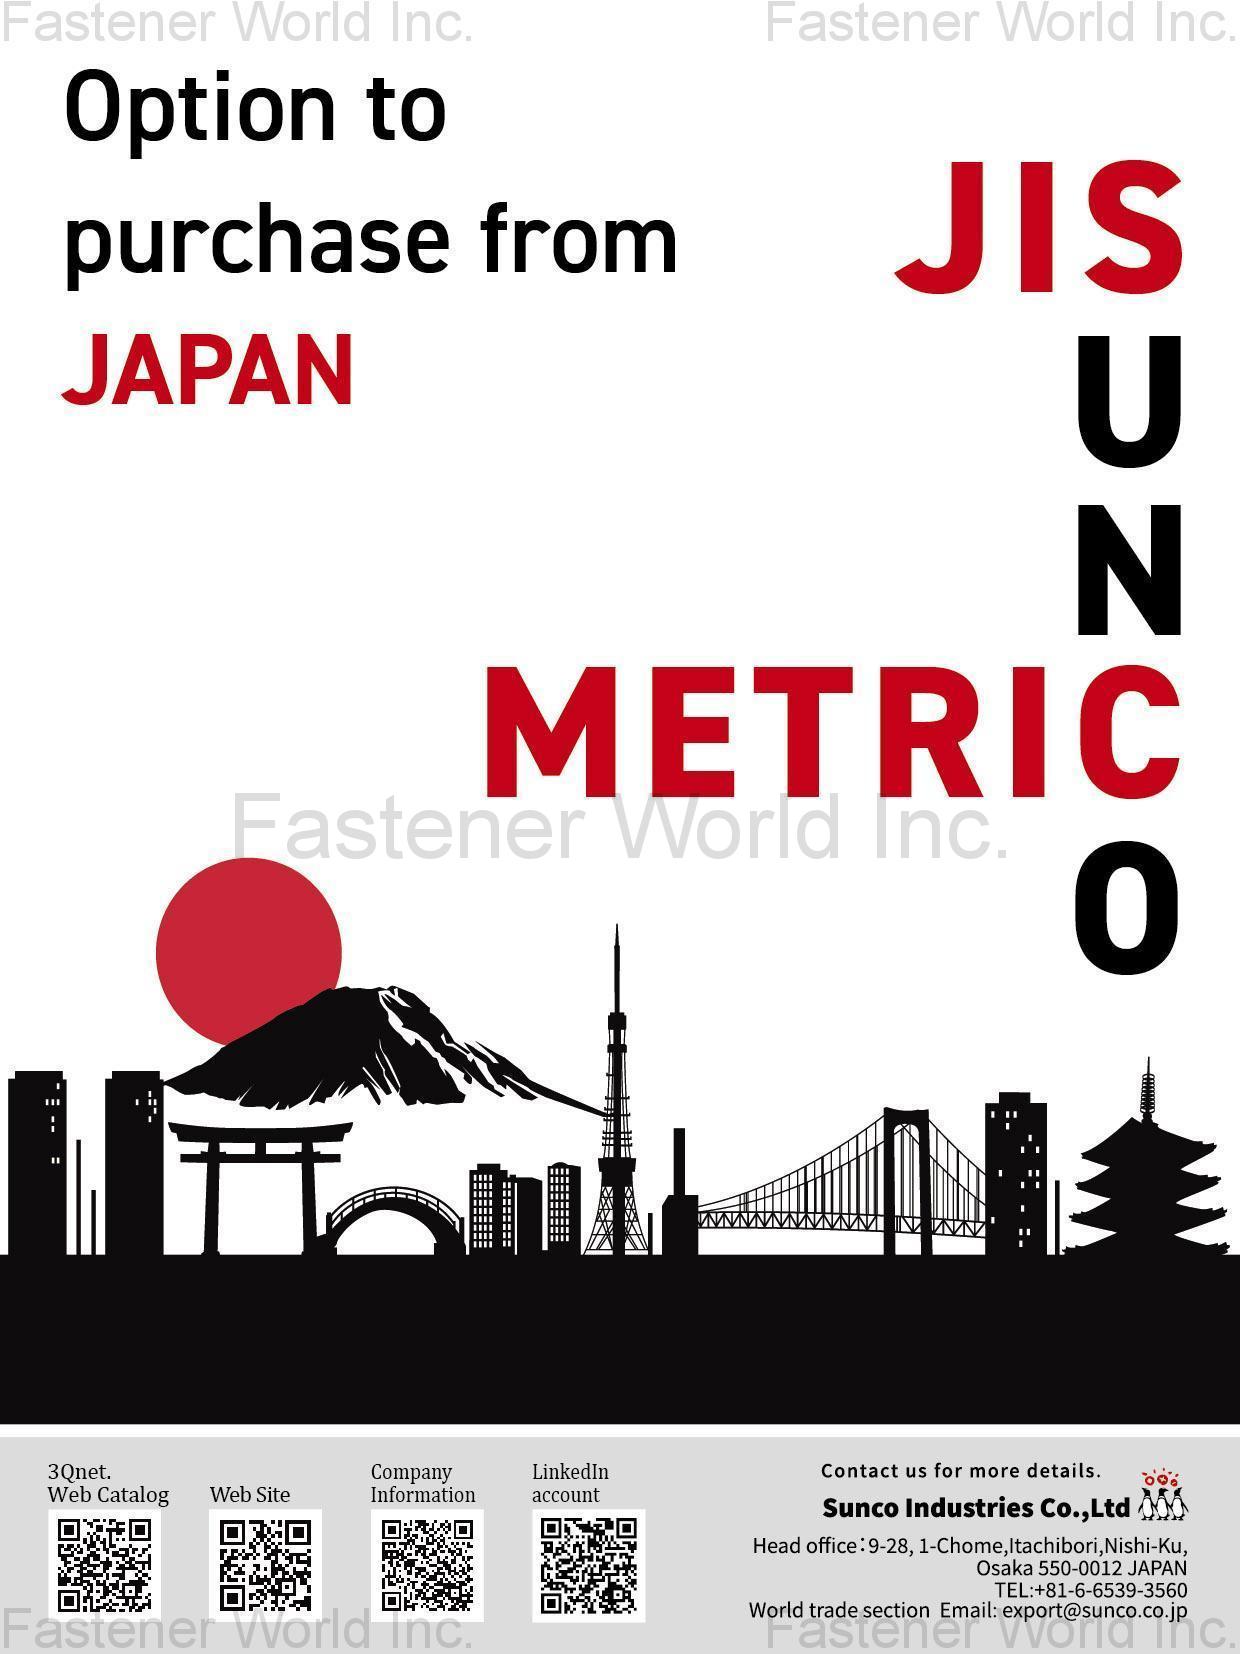 SUNCO INDUSTRIES CO., LTD. JAPAN , High-quallity Japanese Fasteners